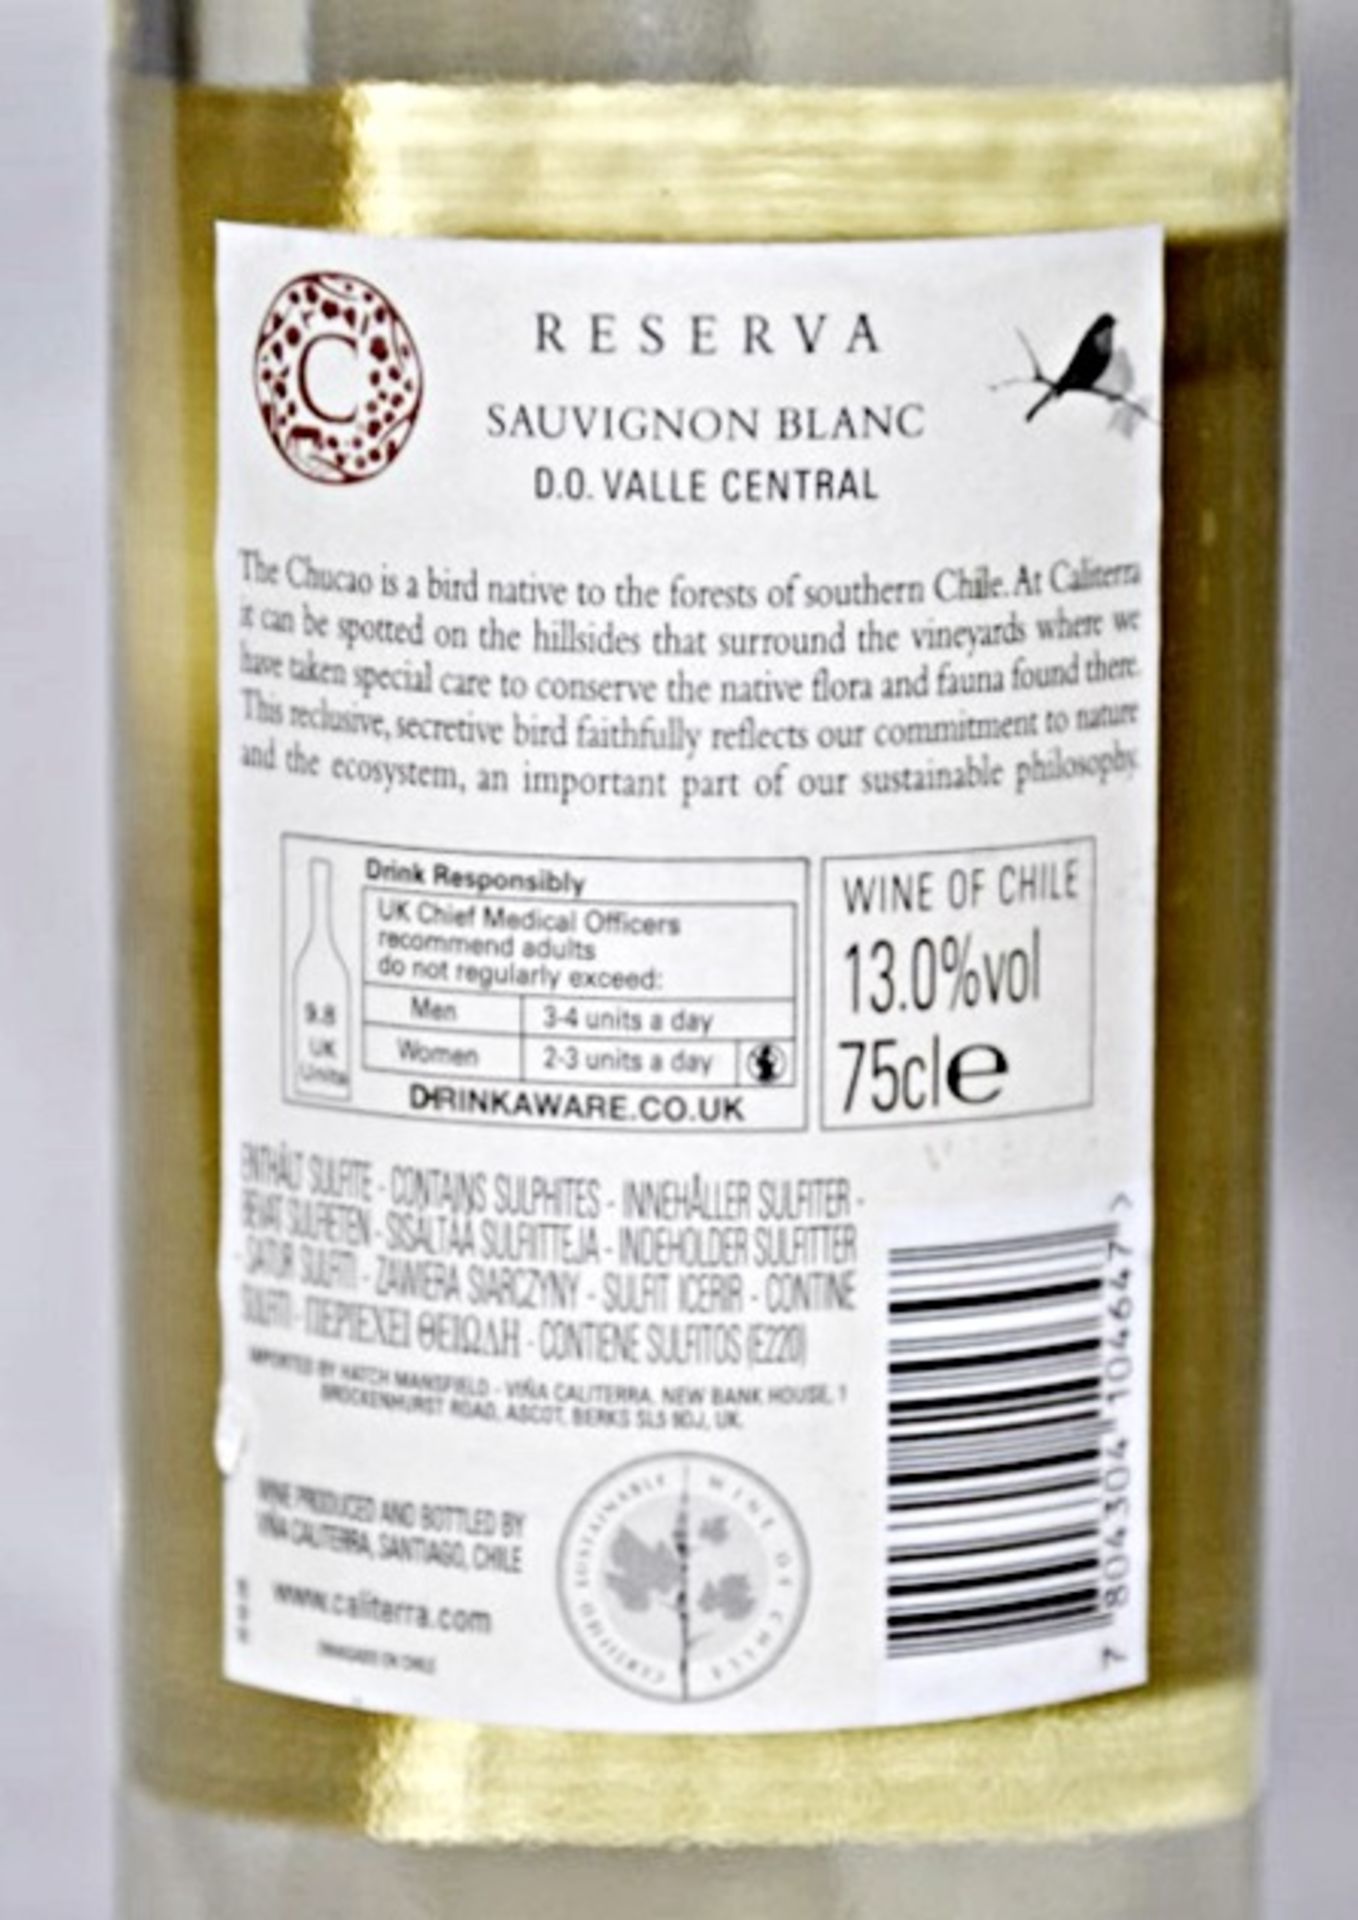 4 x 2013 Caliterra Reserva Sauvignon Blanc, Curico Valley, Chile - 2013 – Bottle Size 75cl - - Image 3 of 3